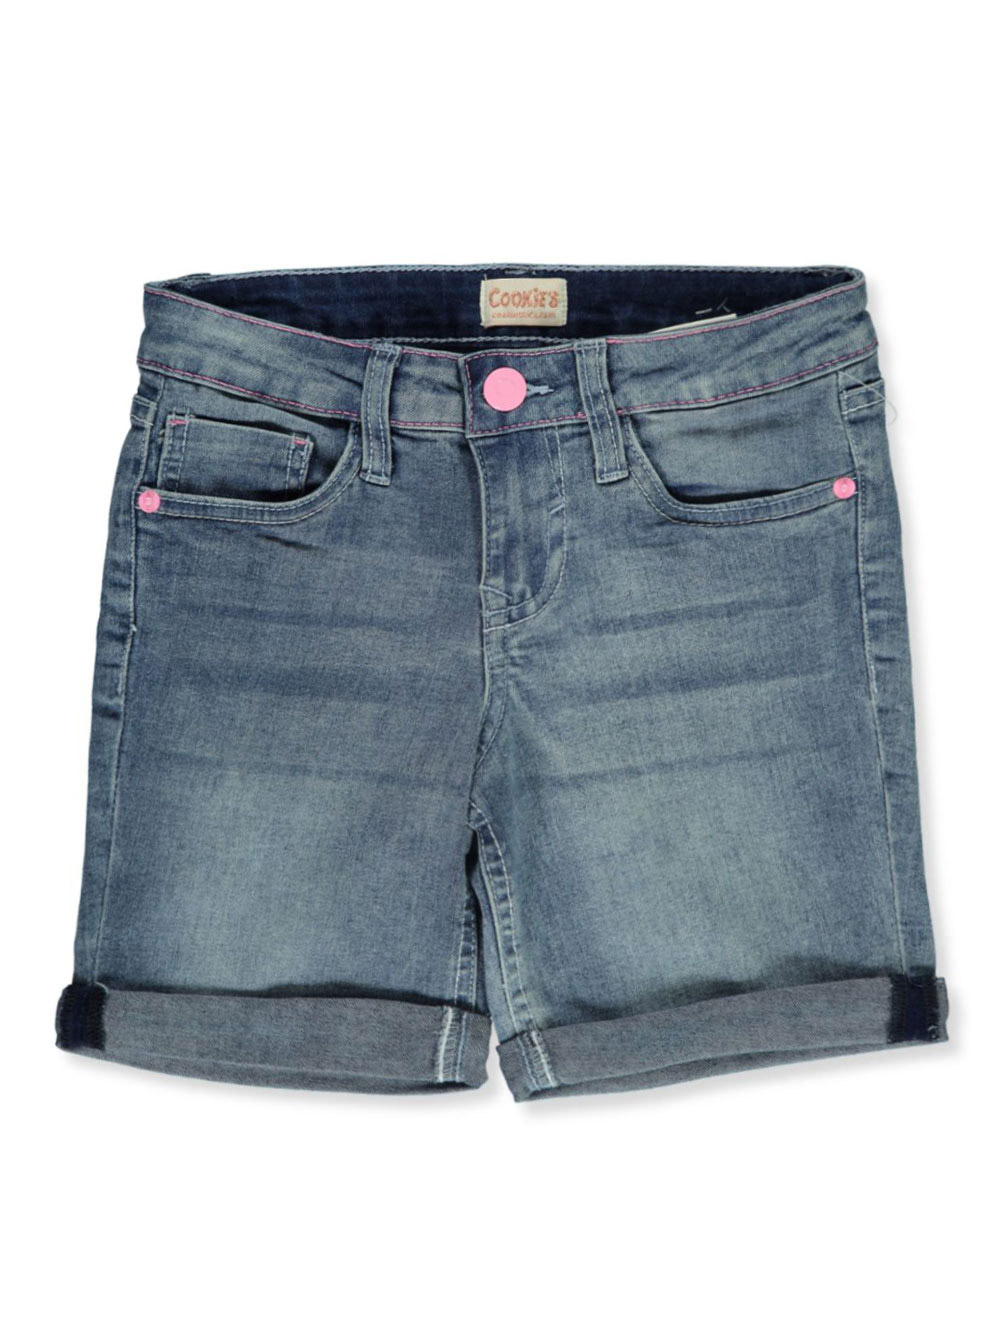 Cookie's Girls' Bermuda Jean Shorts 